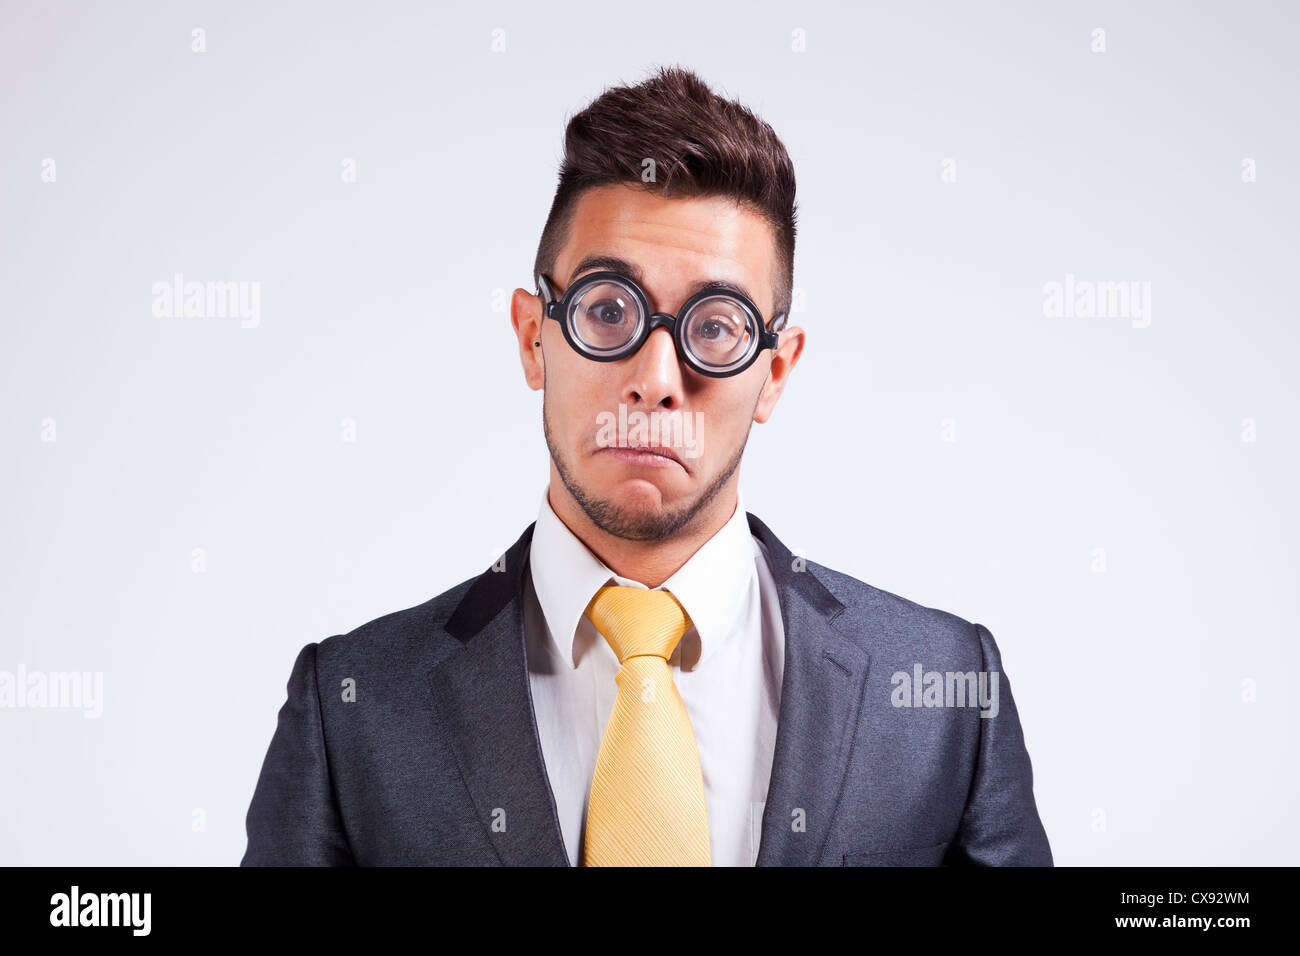 Sad nerd businessman with funny glasses Stock Photo